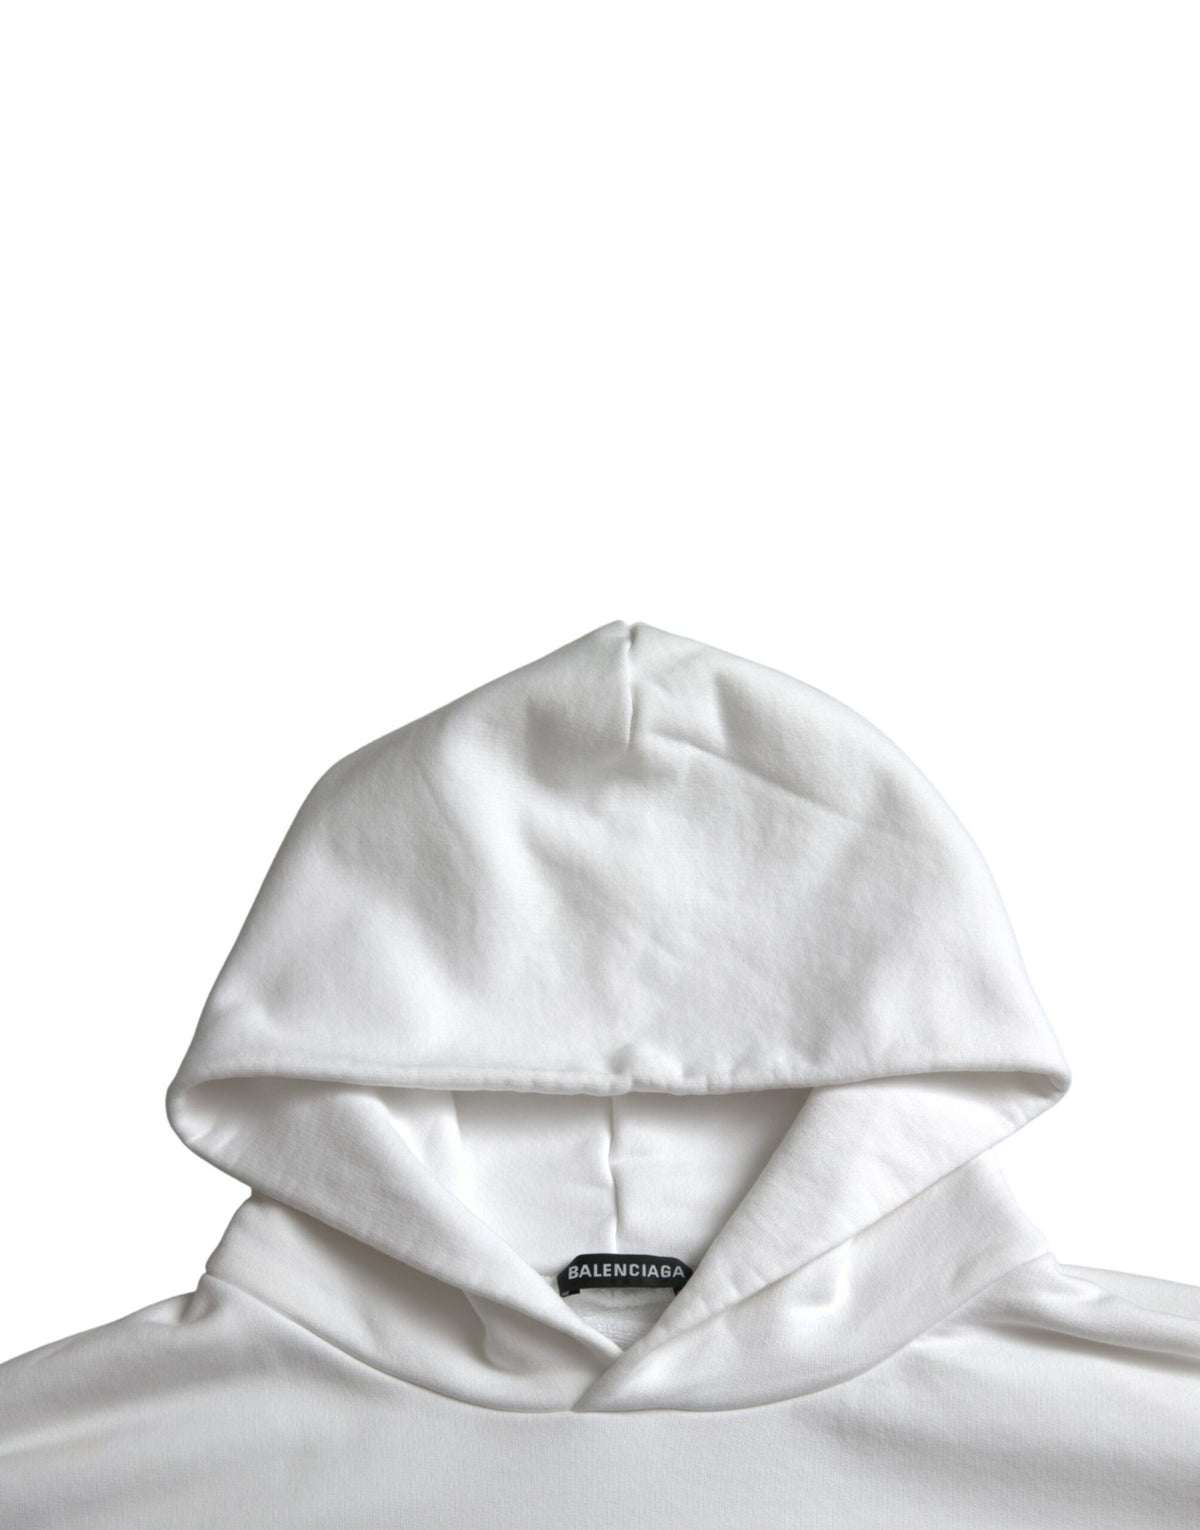 Balenciaga White Cotton Logo Hooded Pullover Sweatshirt Sweater